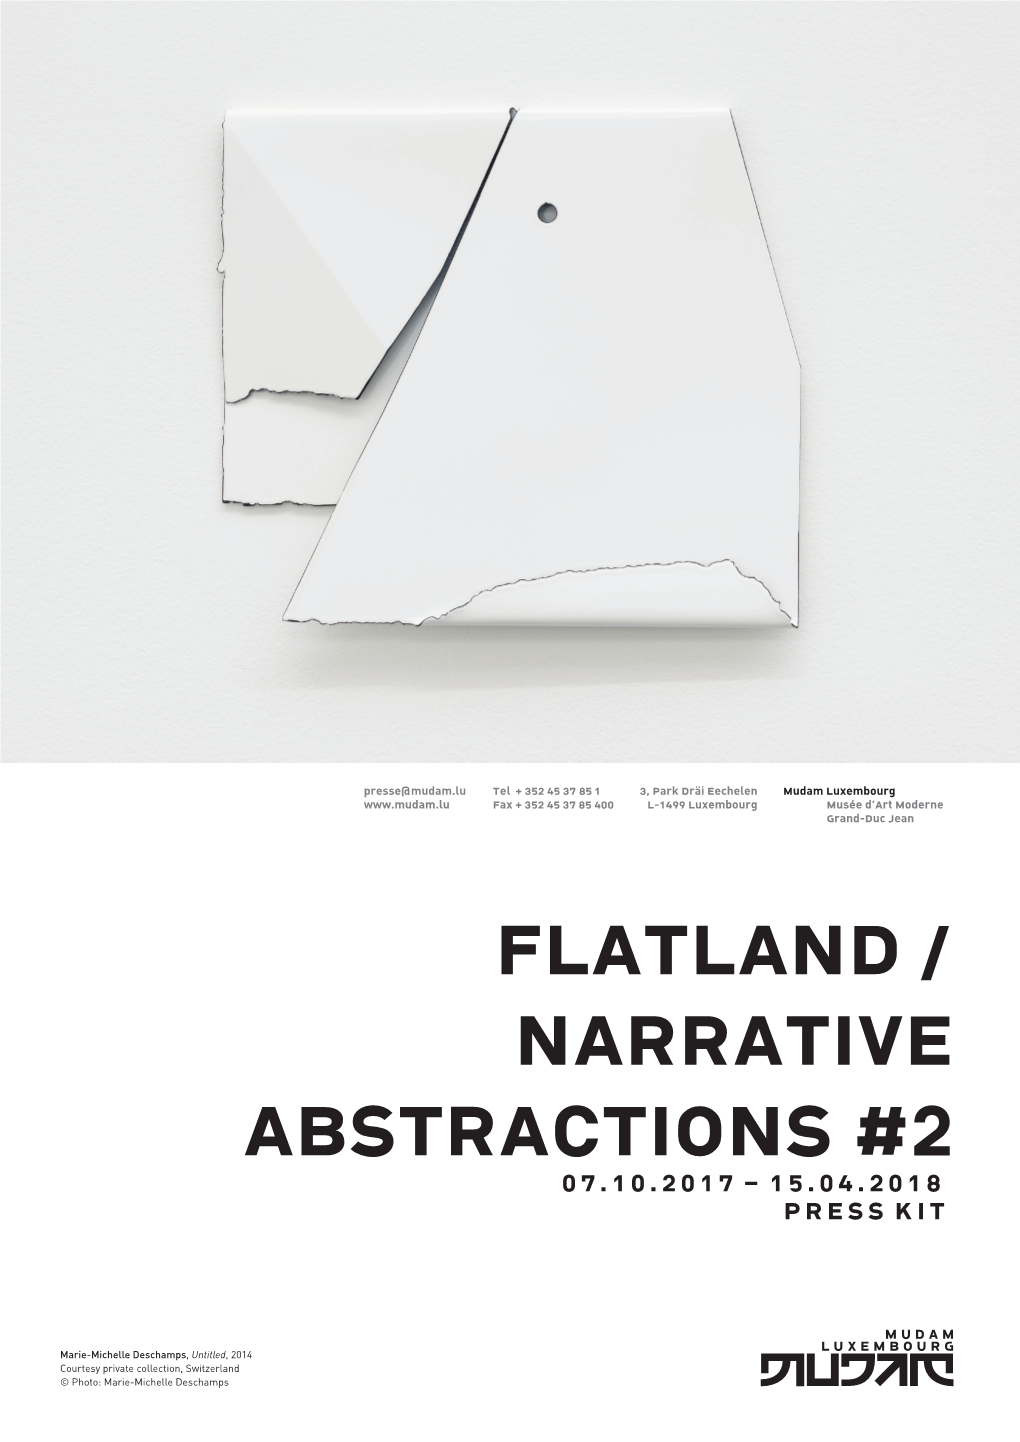 Flatland / Narrative Abstractions #2 07.10.2017 – 15.04.2018 Press Kit